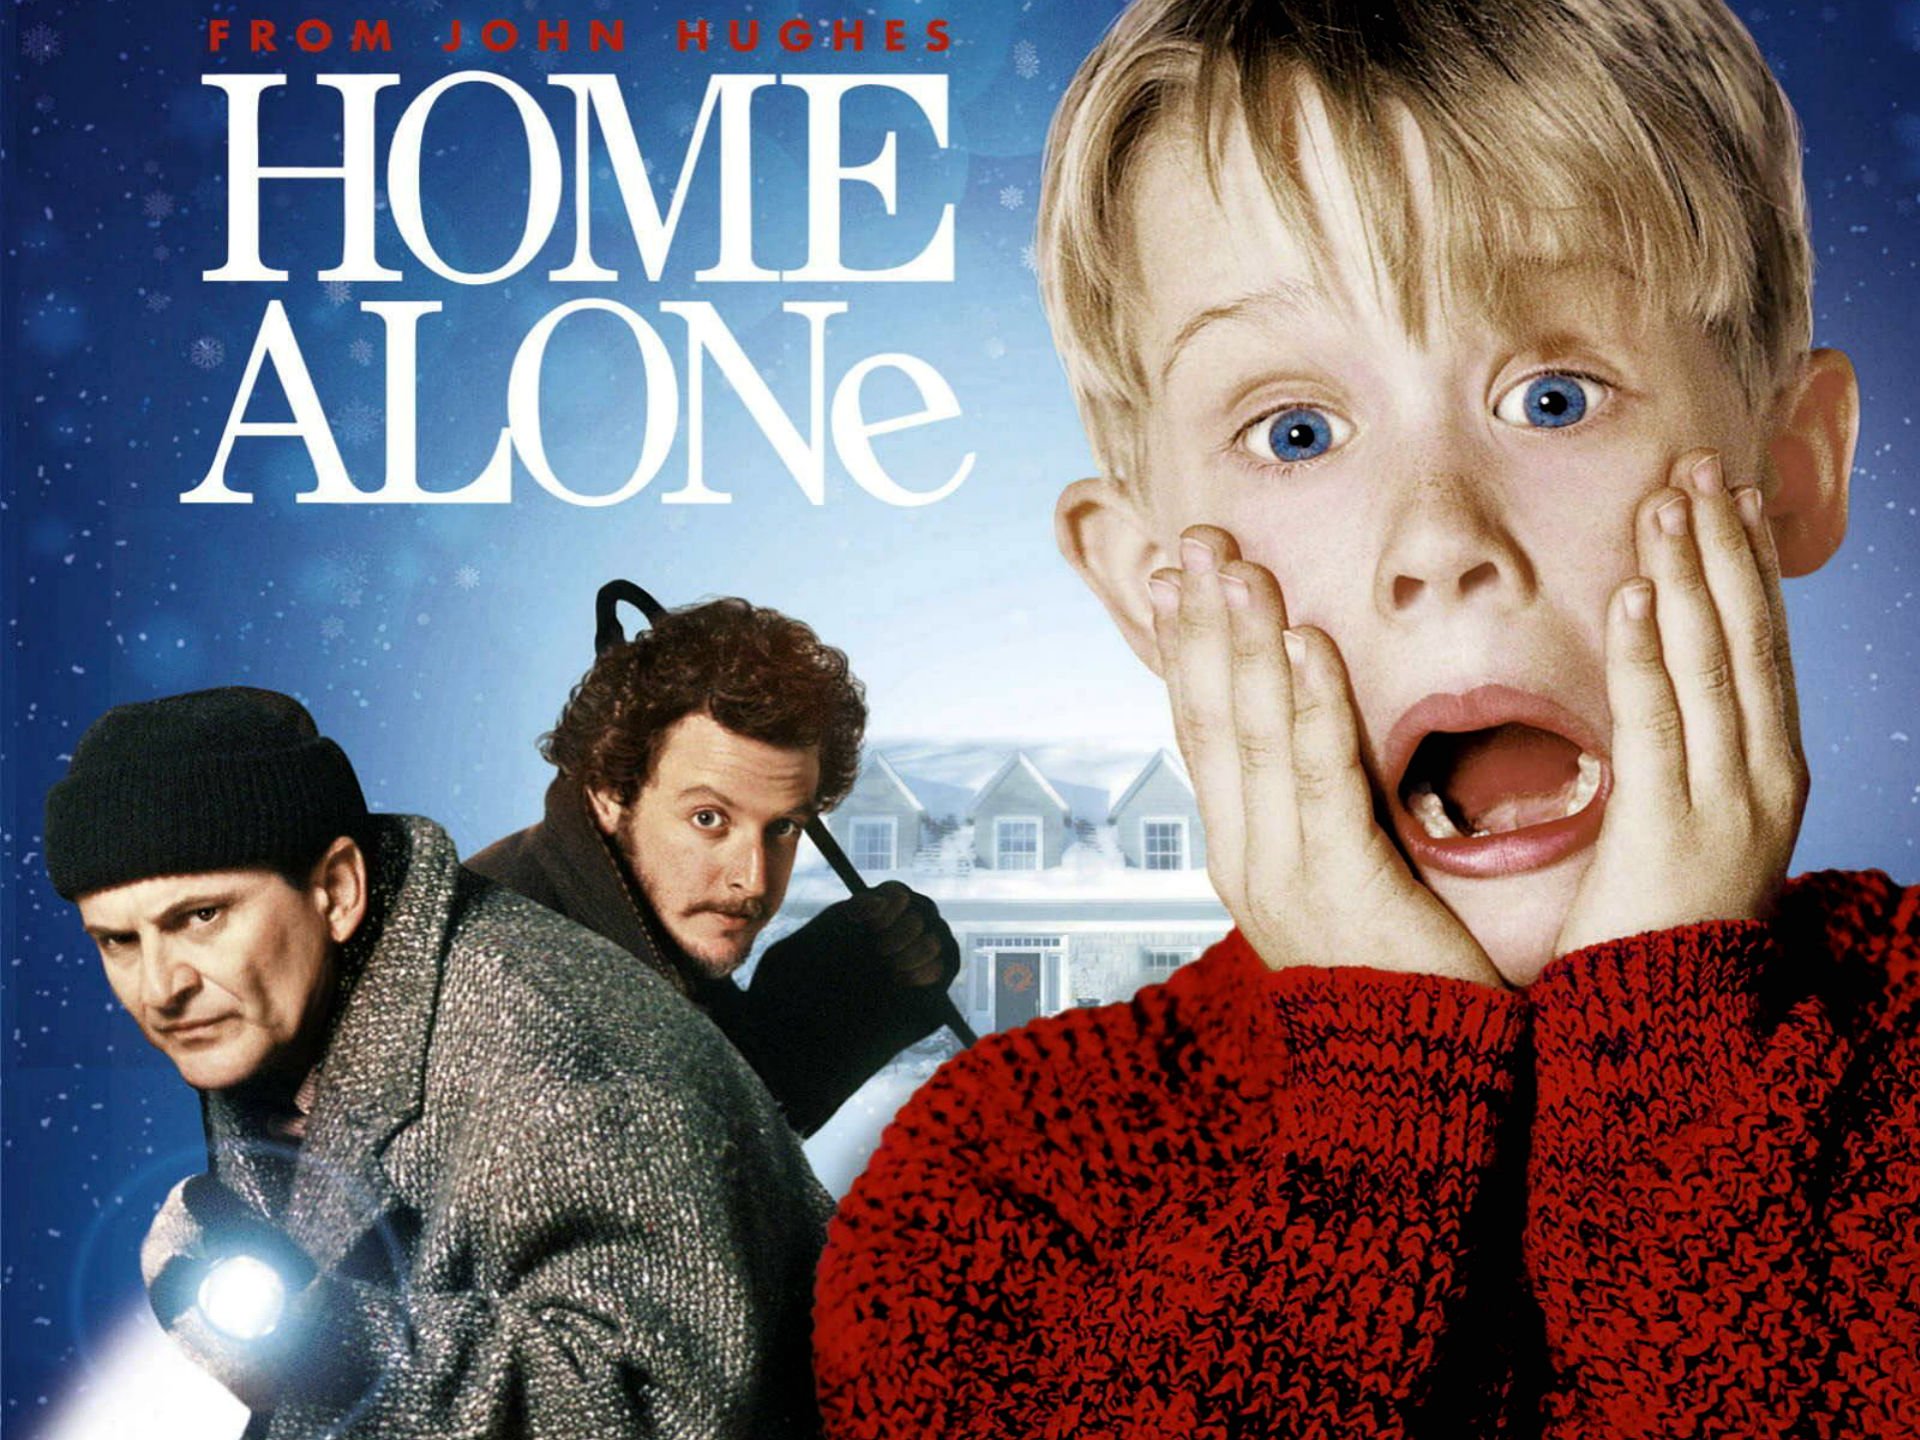 home alone, Comedy, Family, Christmas, Home, Alone Wallpaper